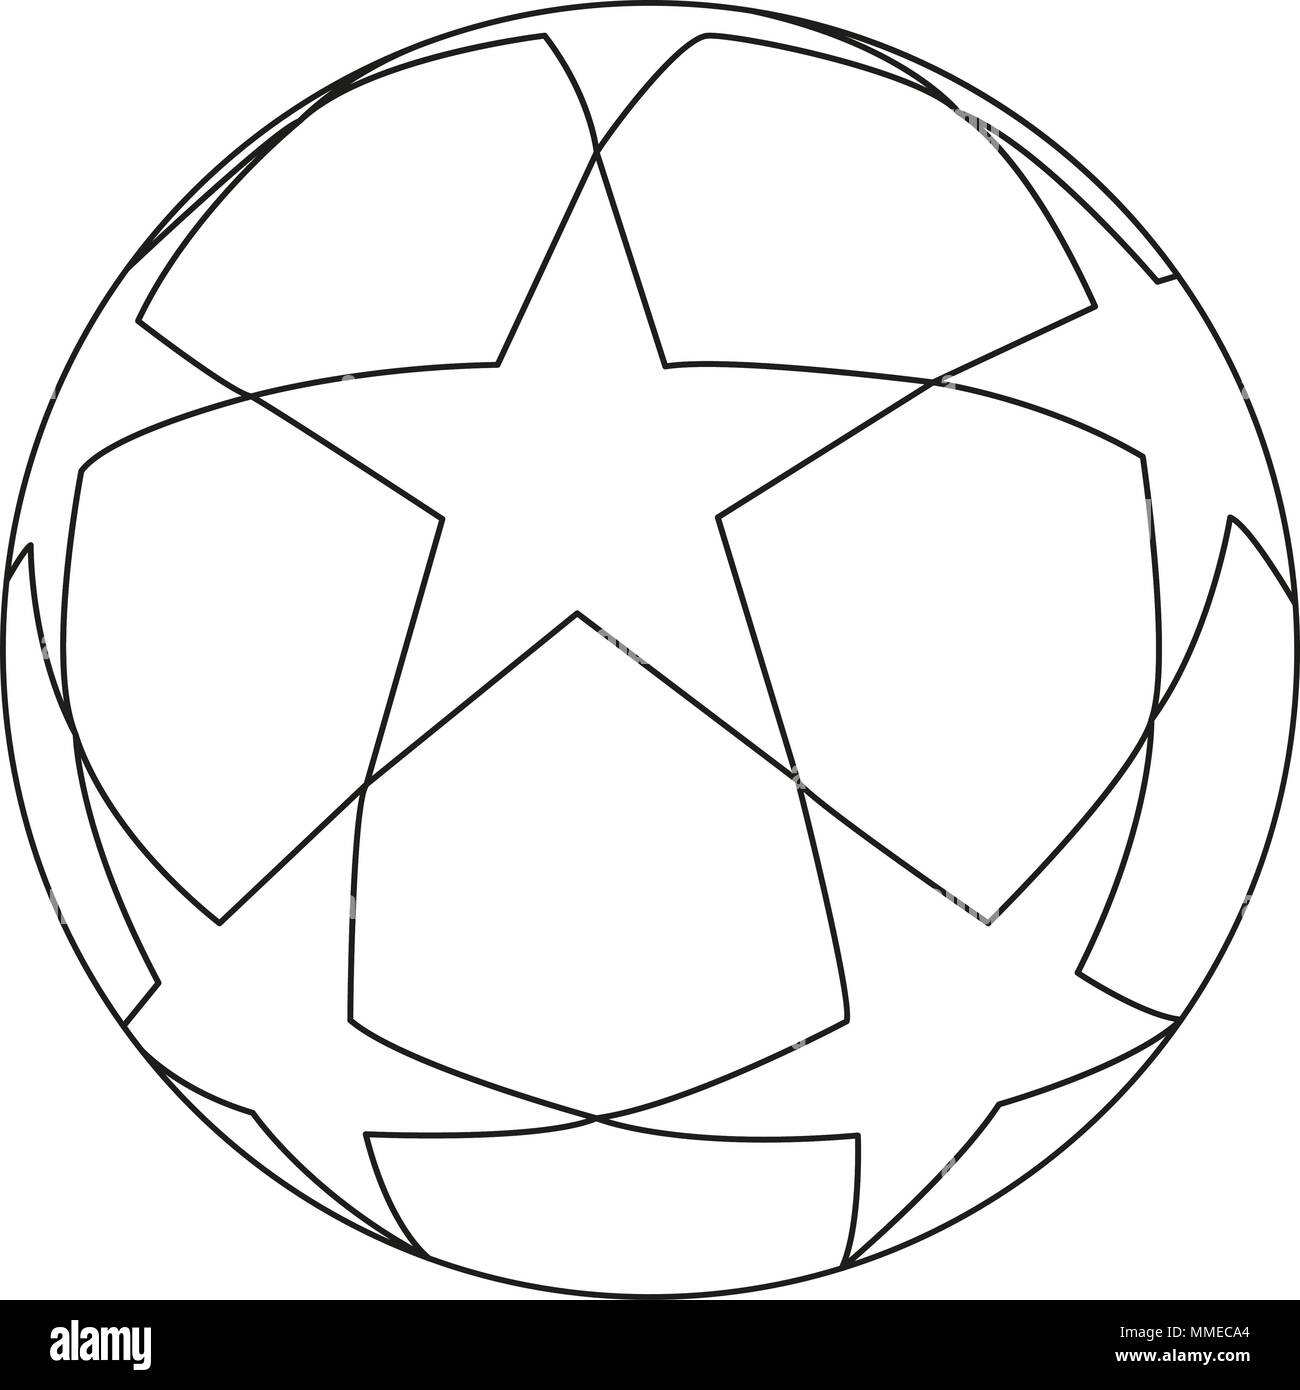 Flat black and white soccer ball star. Stock Vector